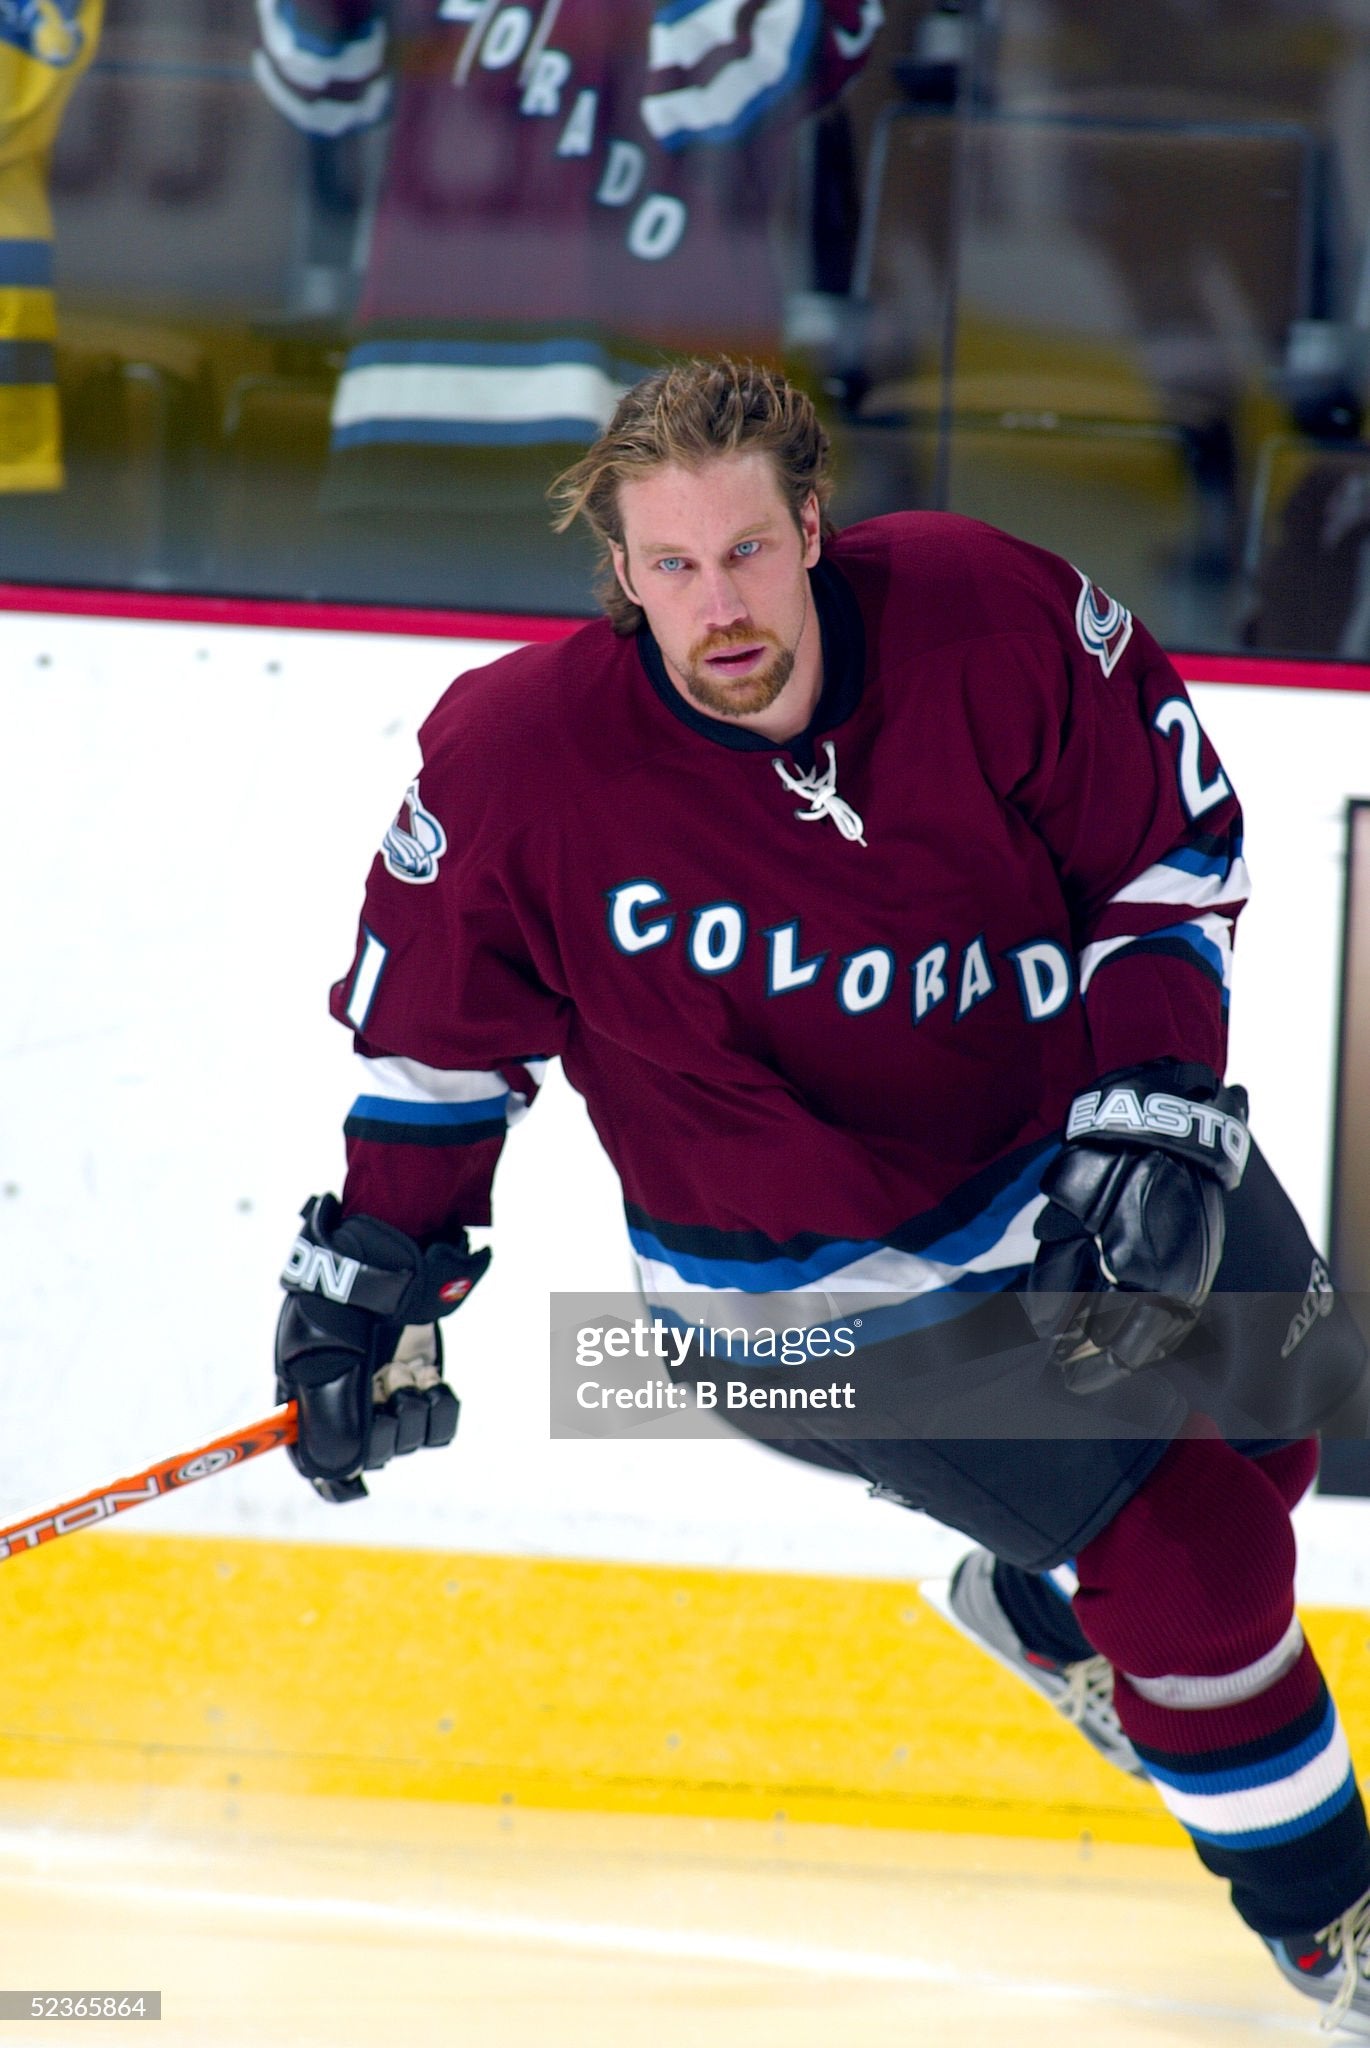 Colorado Avalanche 2001-2004 Peter Forsberg Alternate NHL Hockey Jersey (XL)